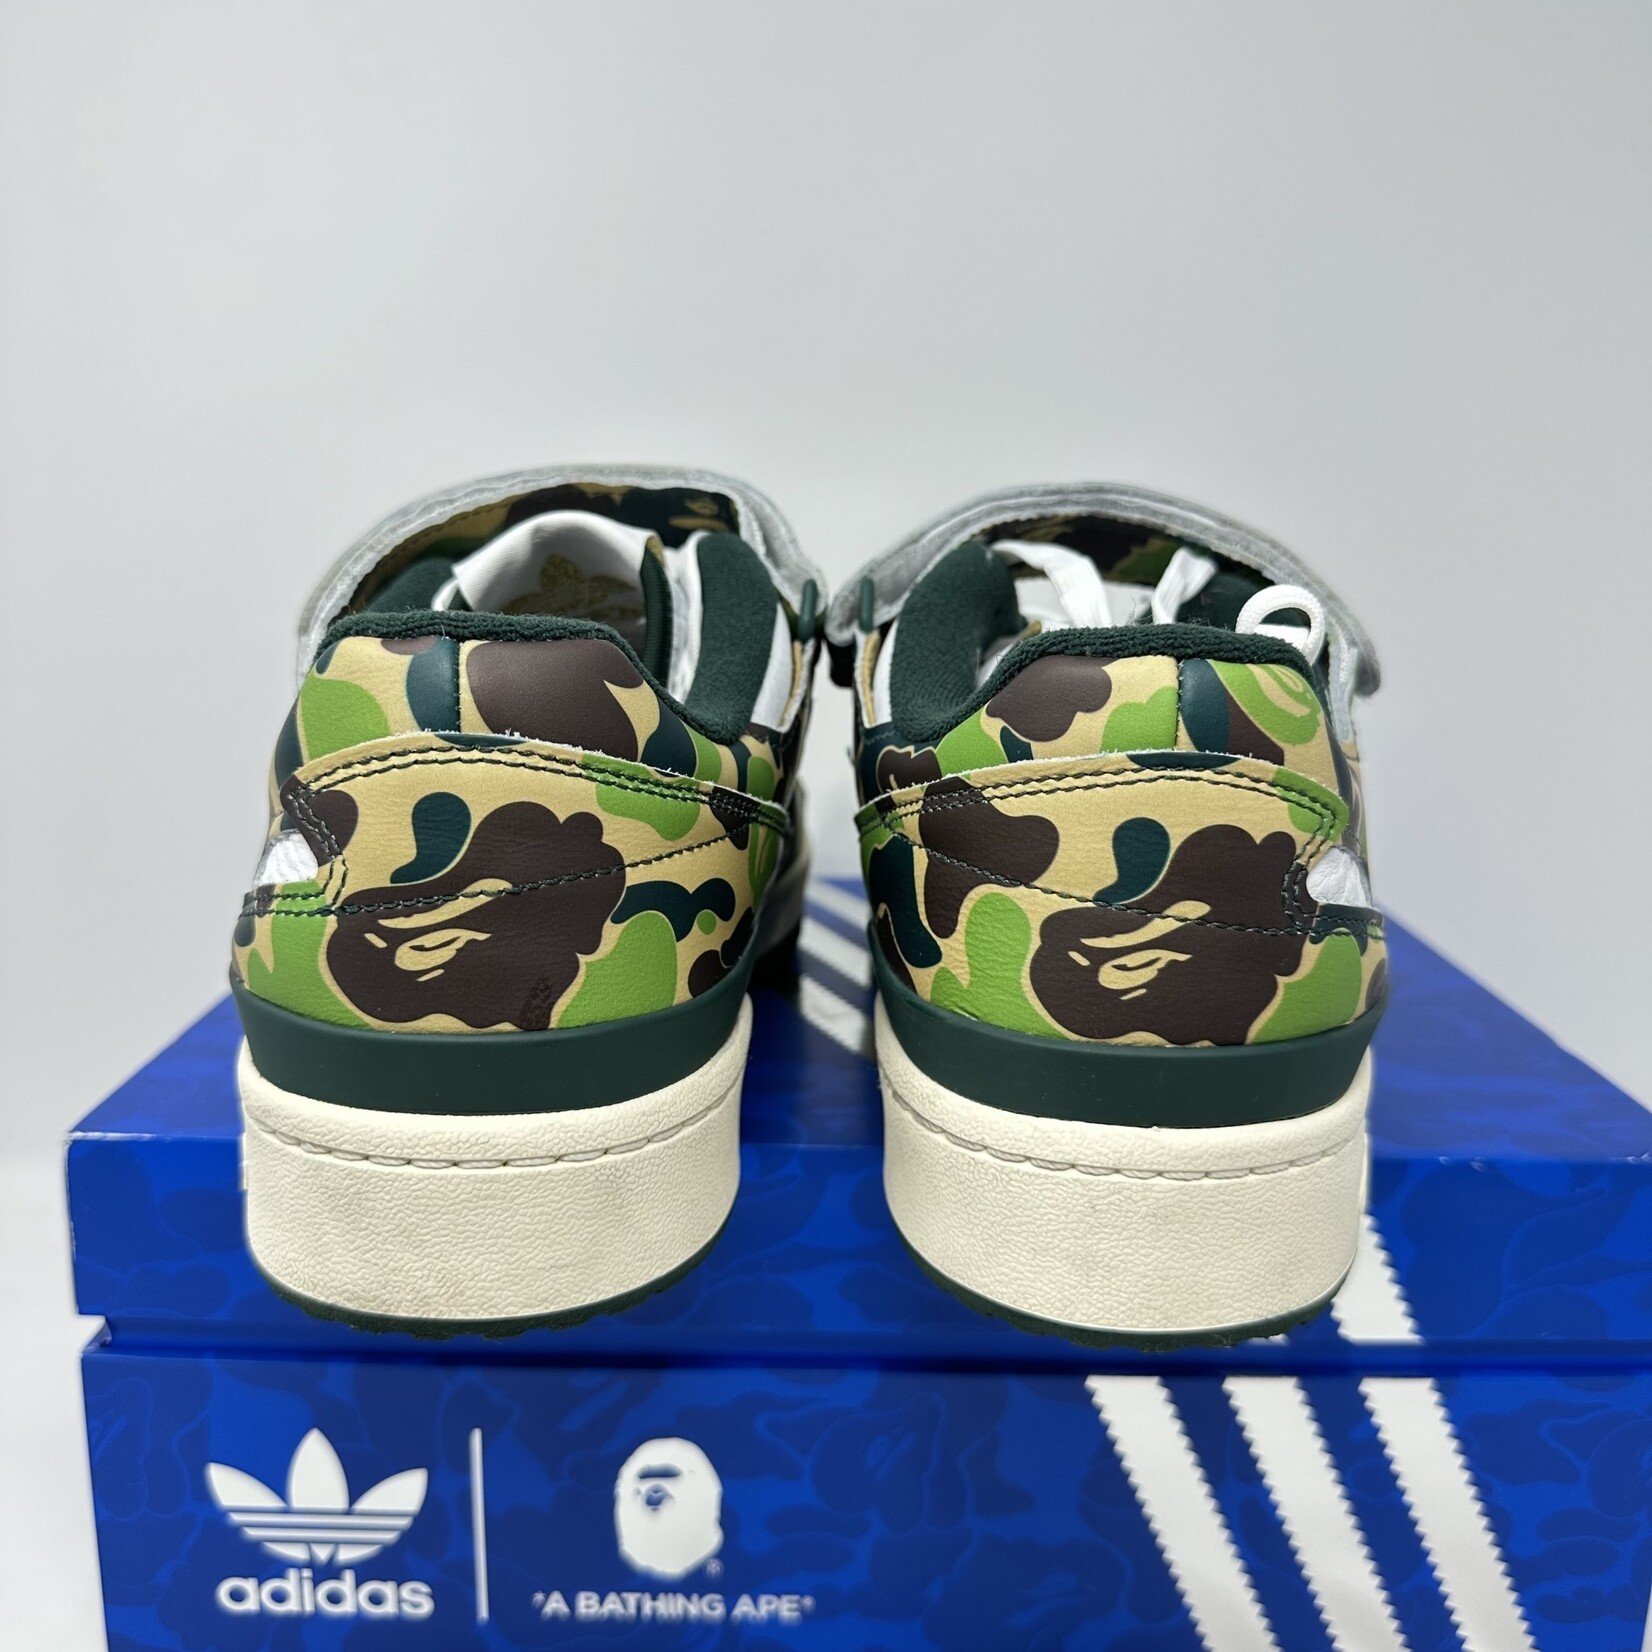 Adidas adidas Forum 84 Low Bape 30th Anniversary Green Camo